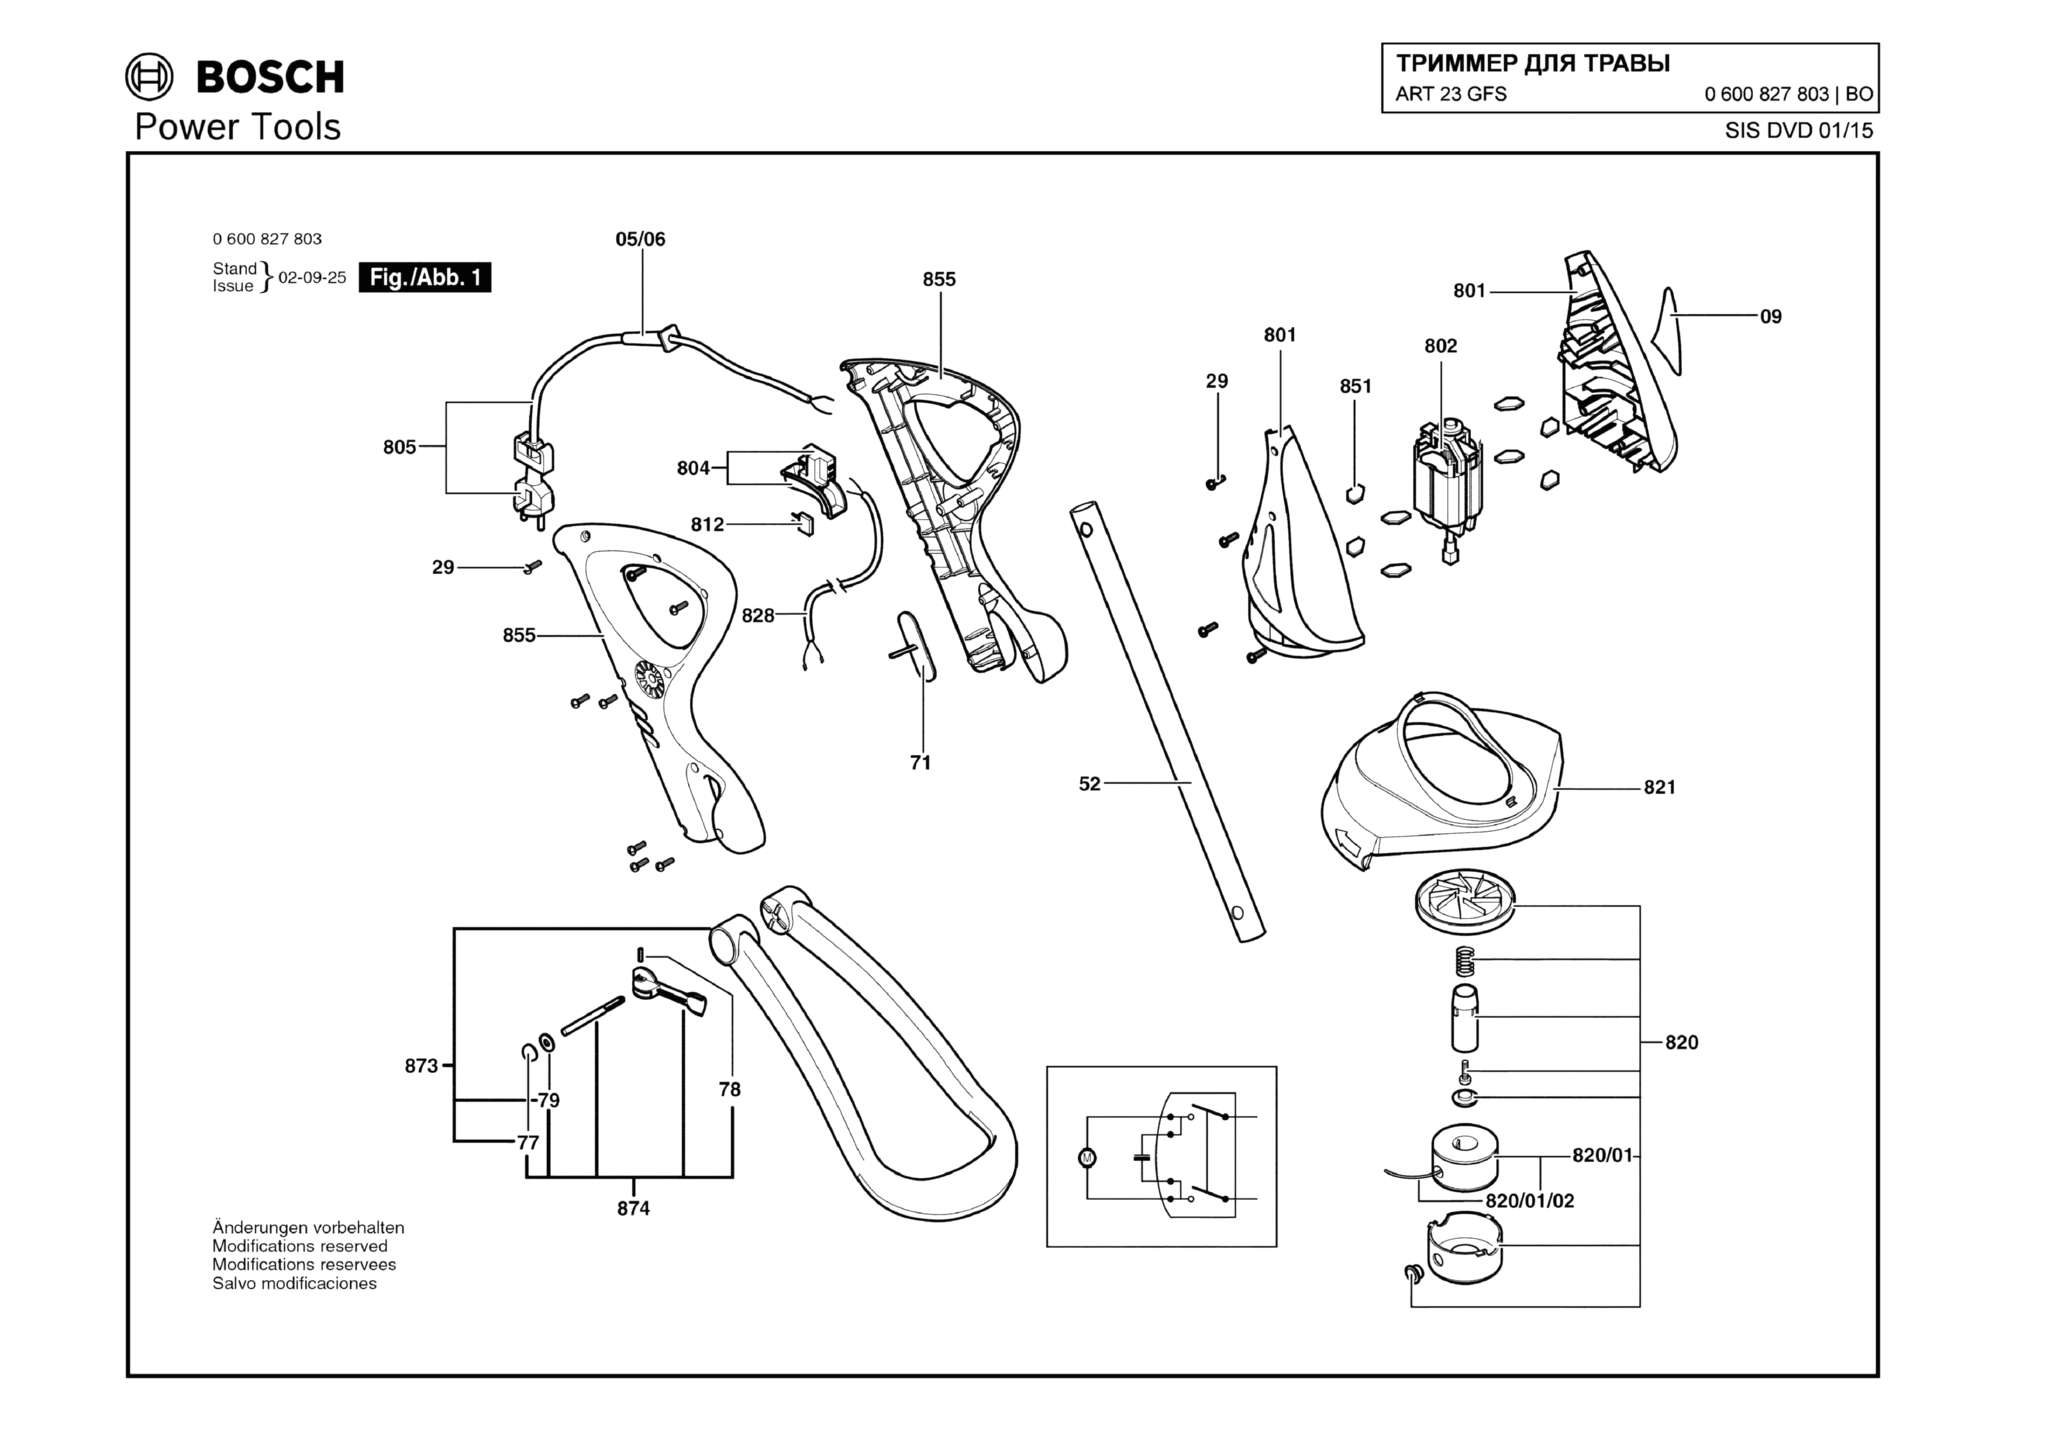 Запчасти, схема и деталировка Bosch ART 23 GFS (ТИП 0600827803)